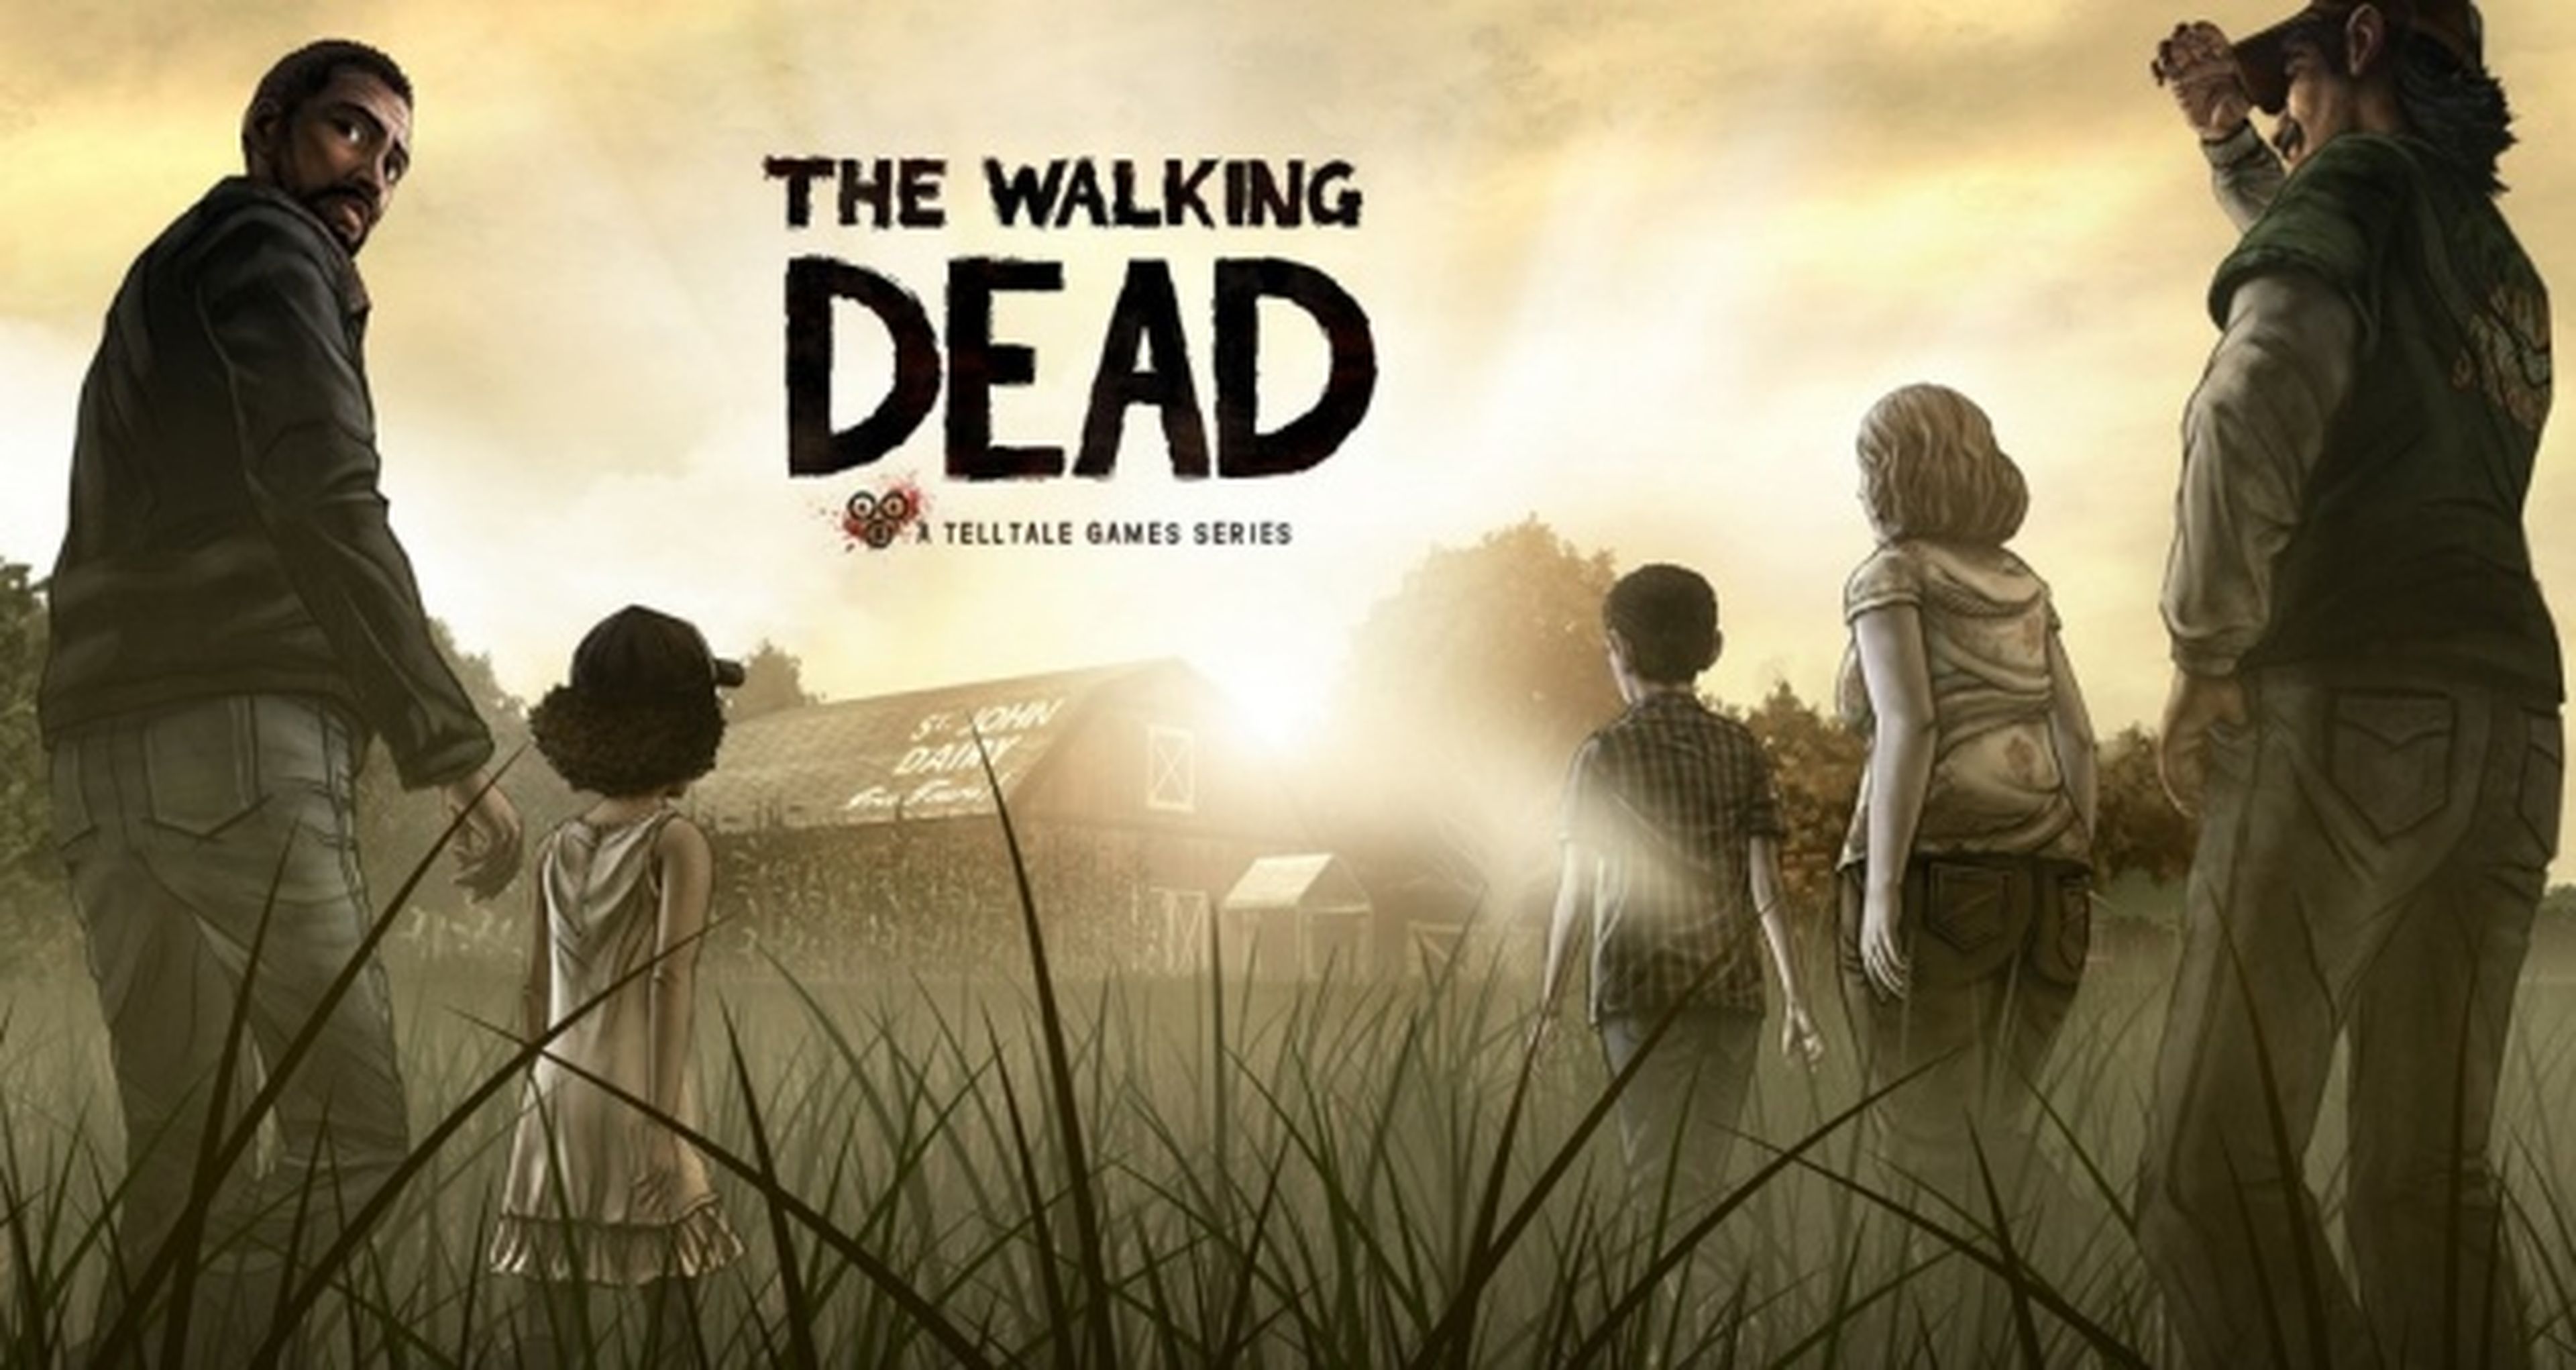 The Walking Dead de Telltale, usado en clases de ética